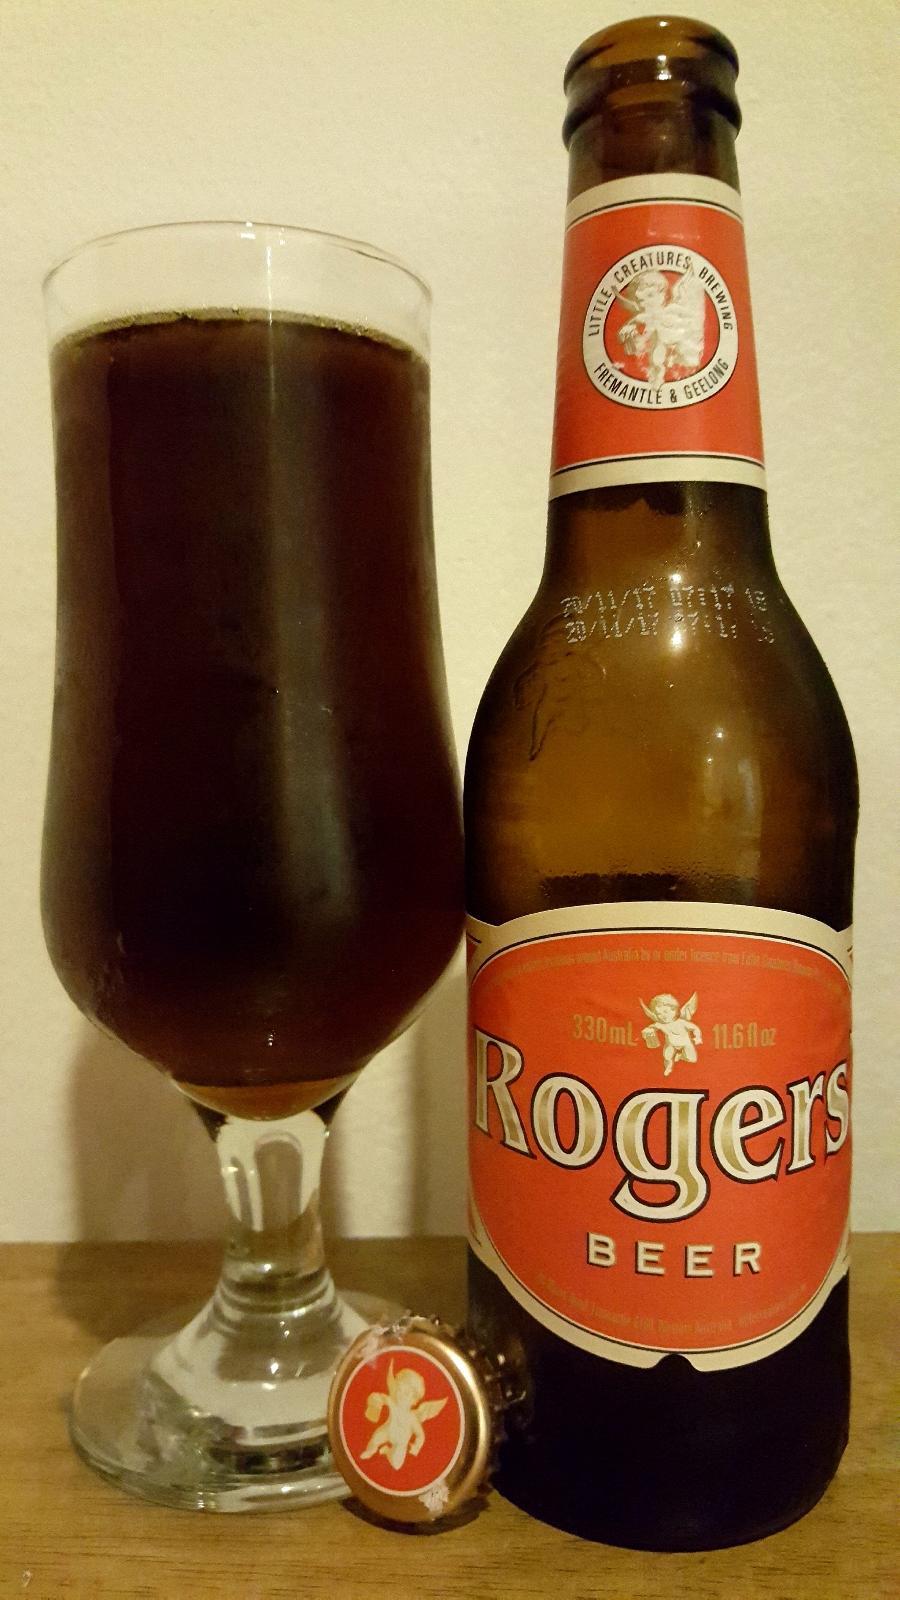 Rogers Beer